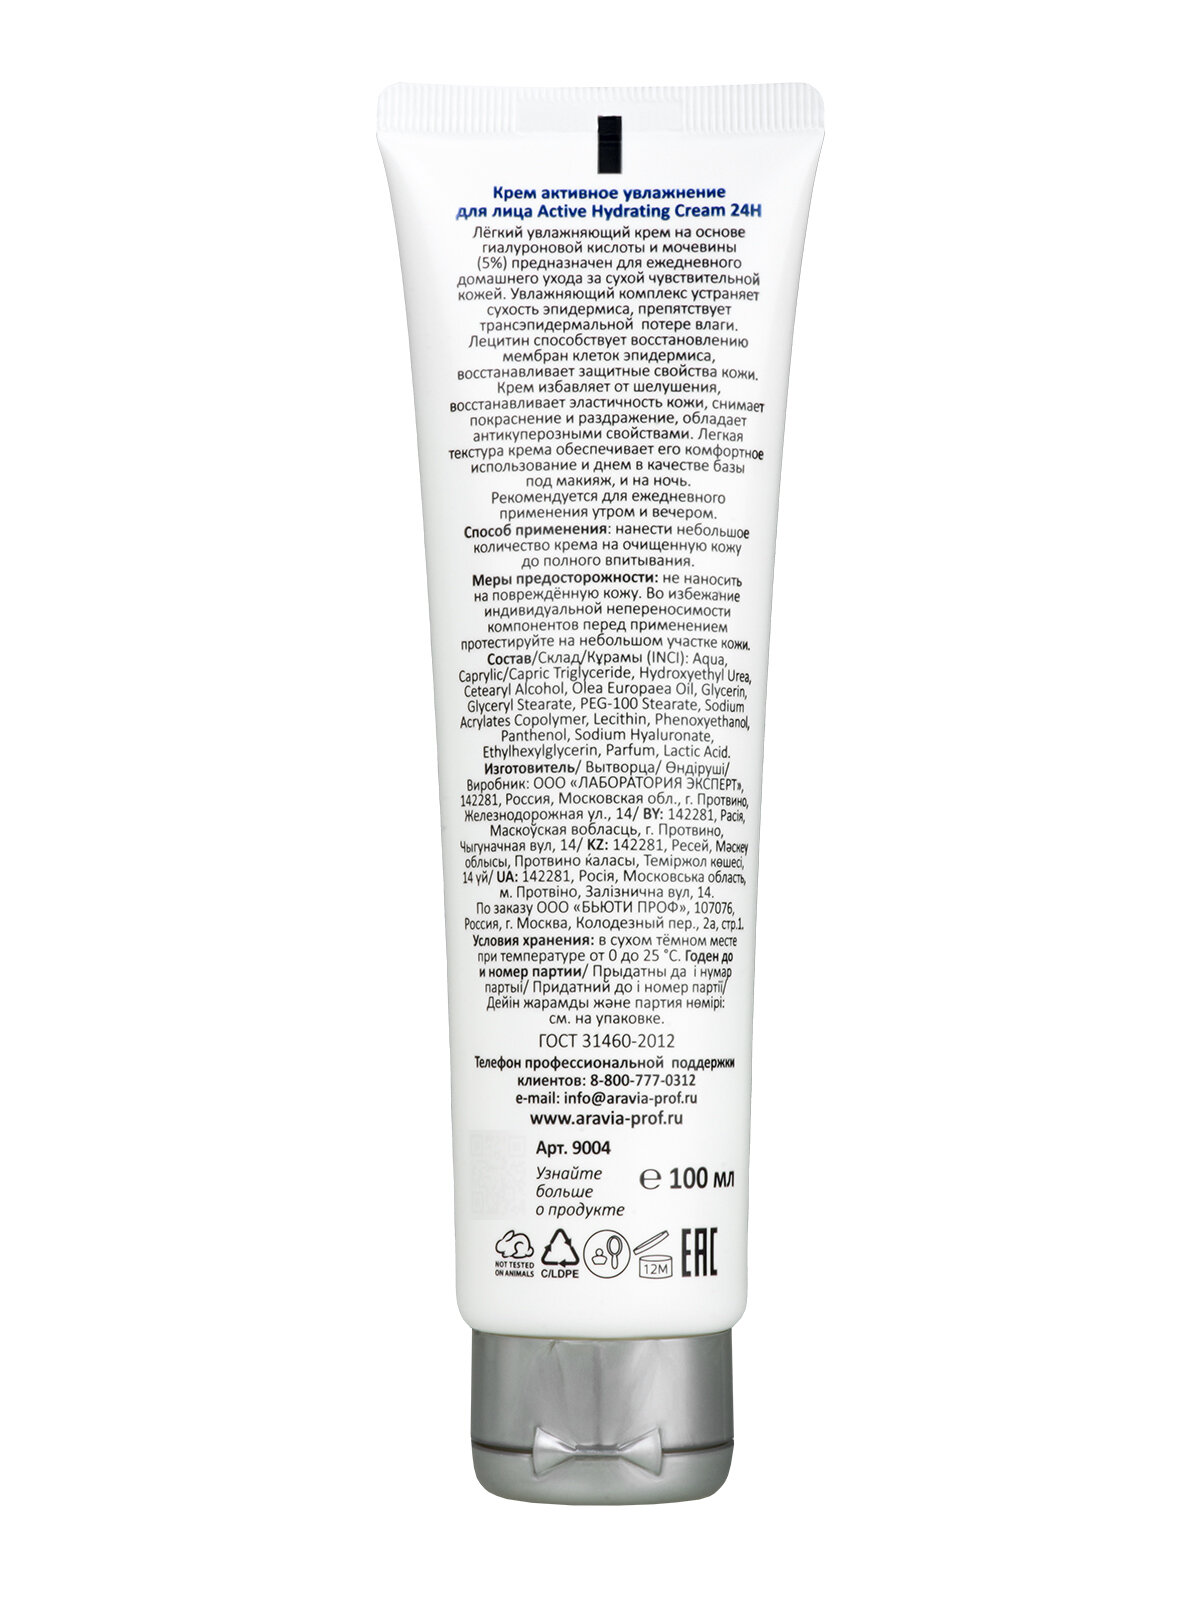 Aravia professional Крем для лица активное увлажнение Active Hydrating Cream 24H, 100 мл (Aravia professional, ) - фото №2